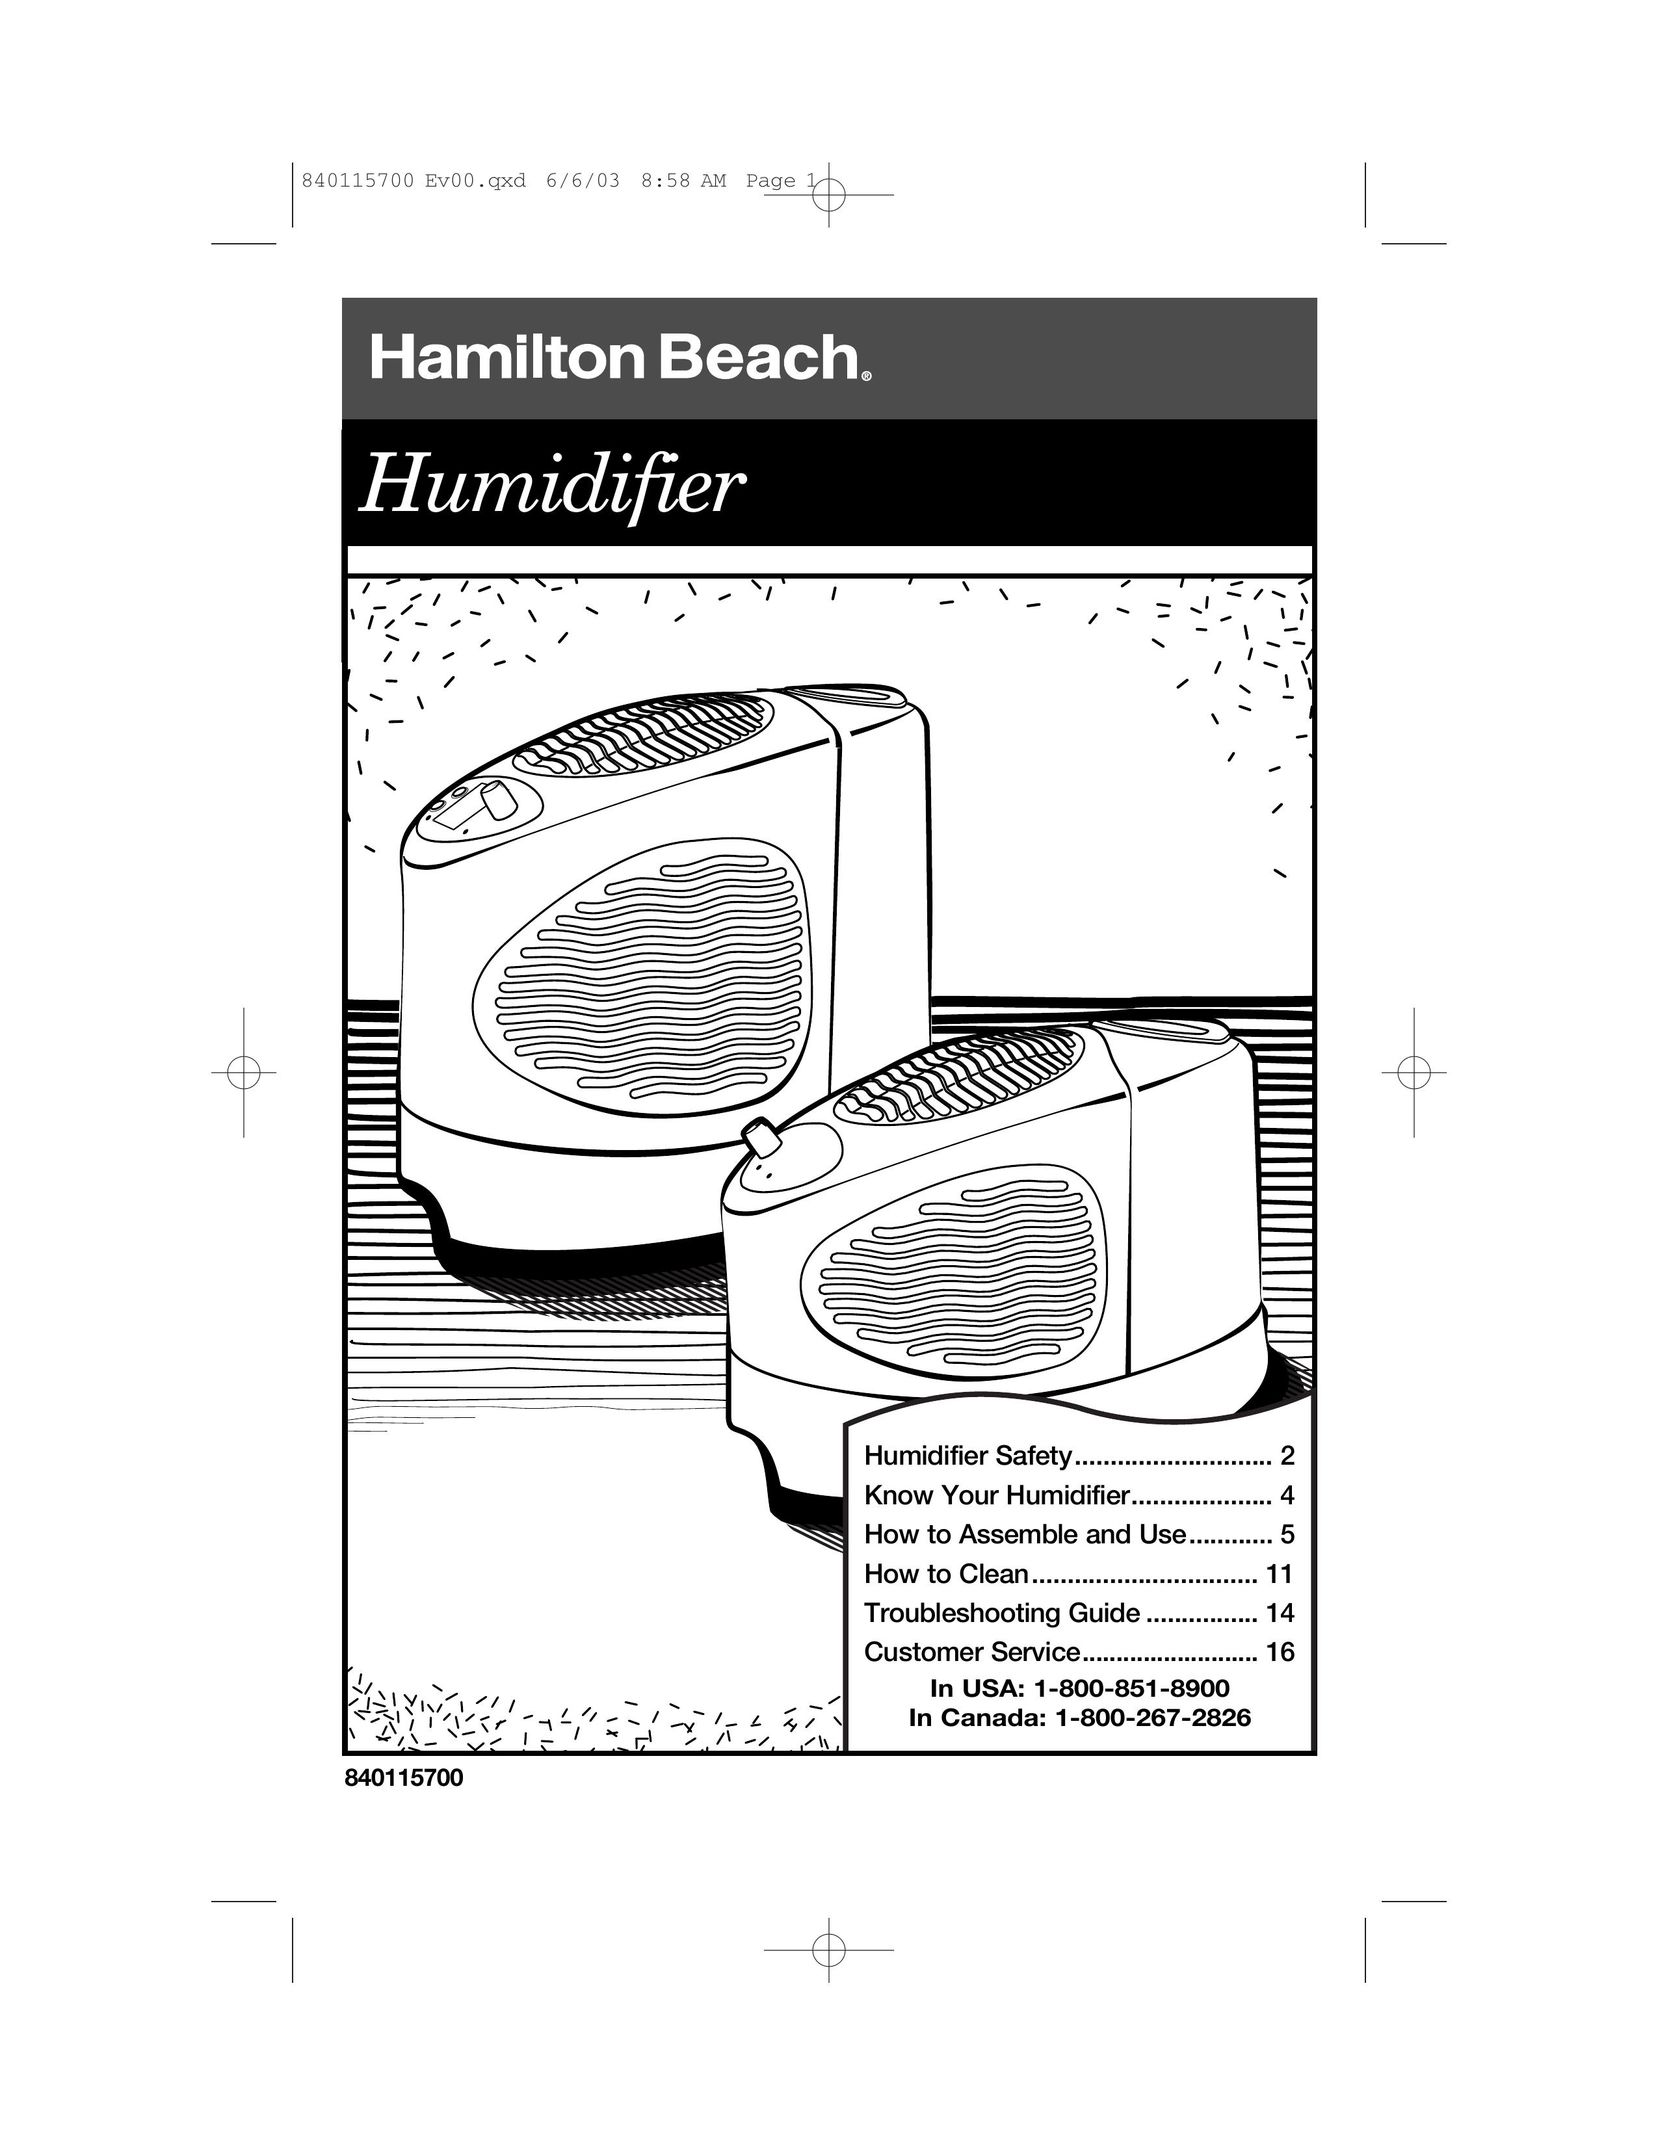 Hamilton Beach 05519C Humidifier User Manual